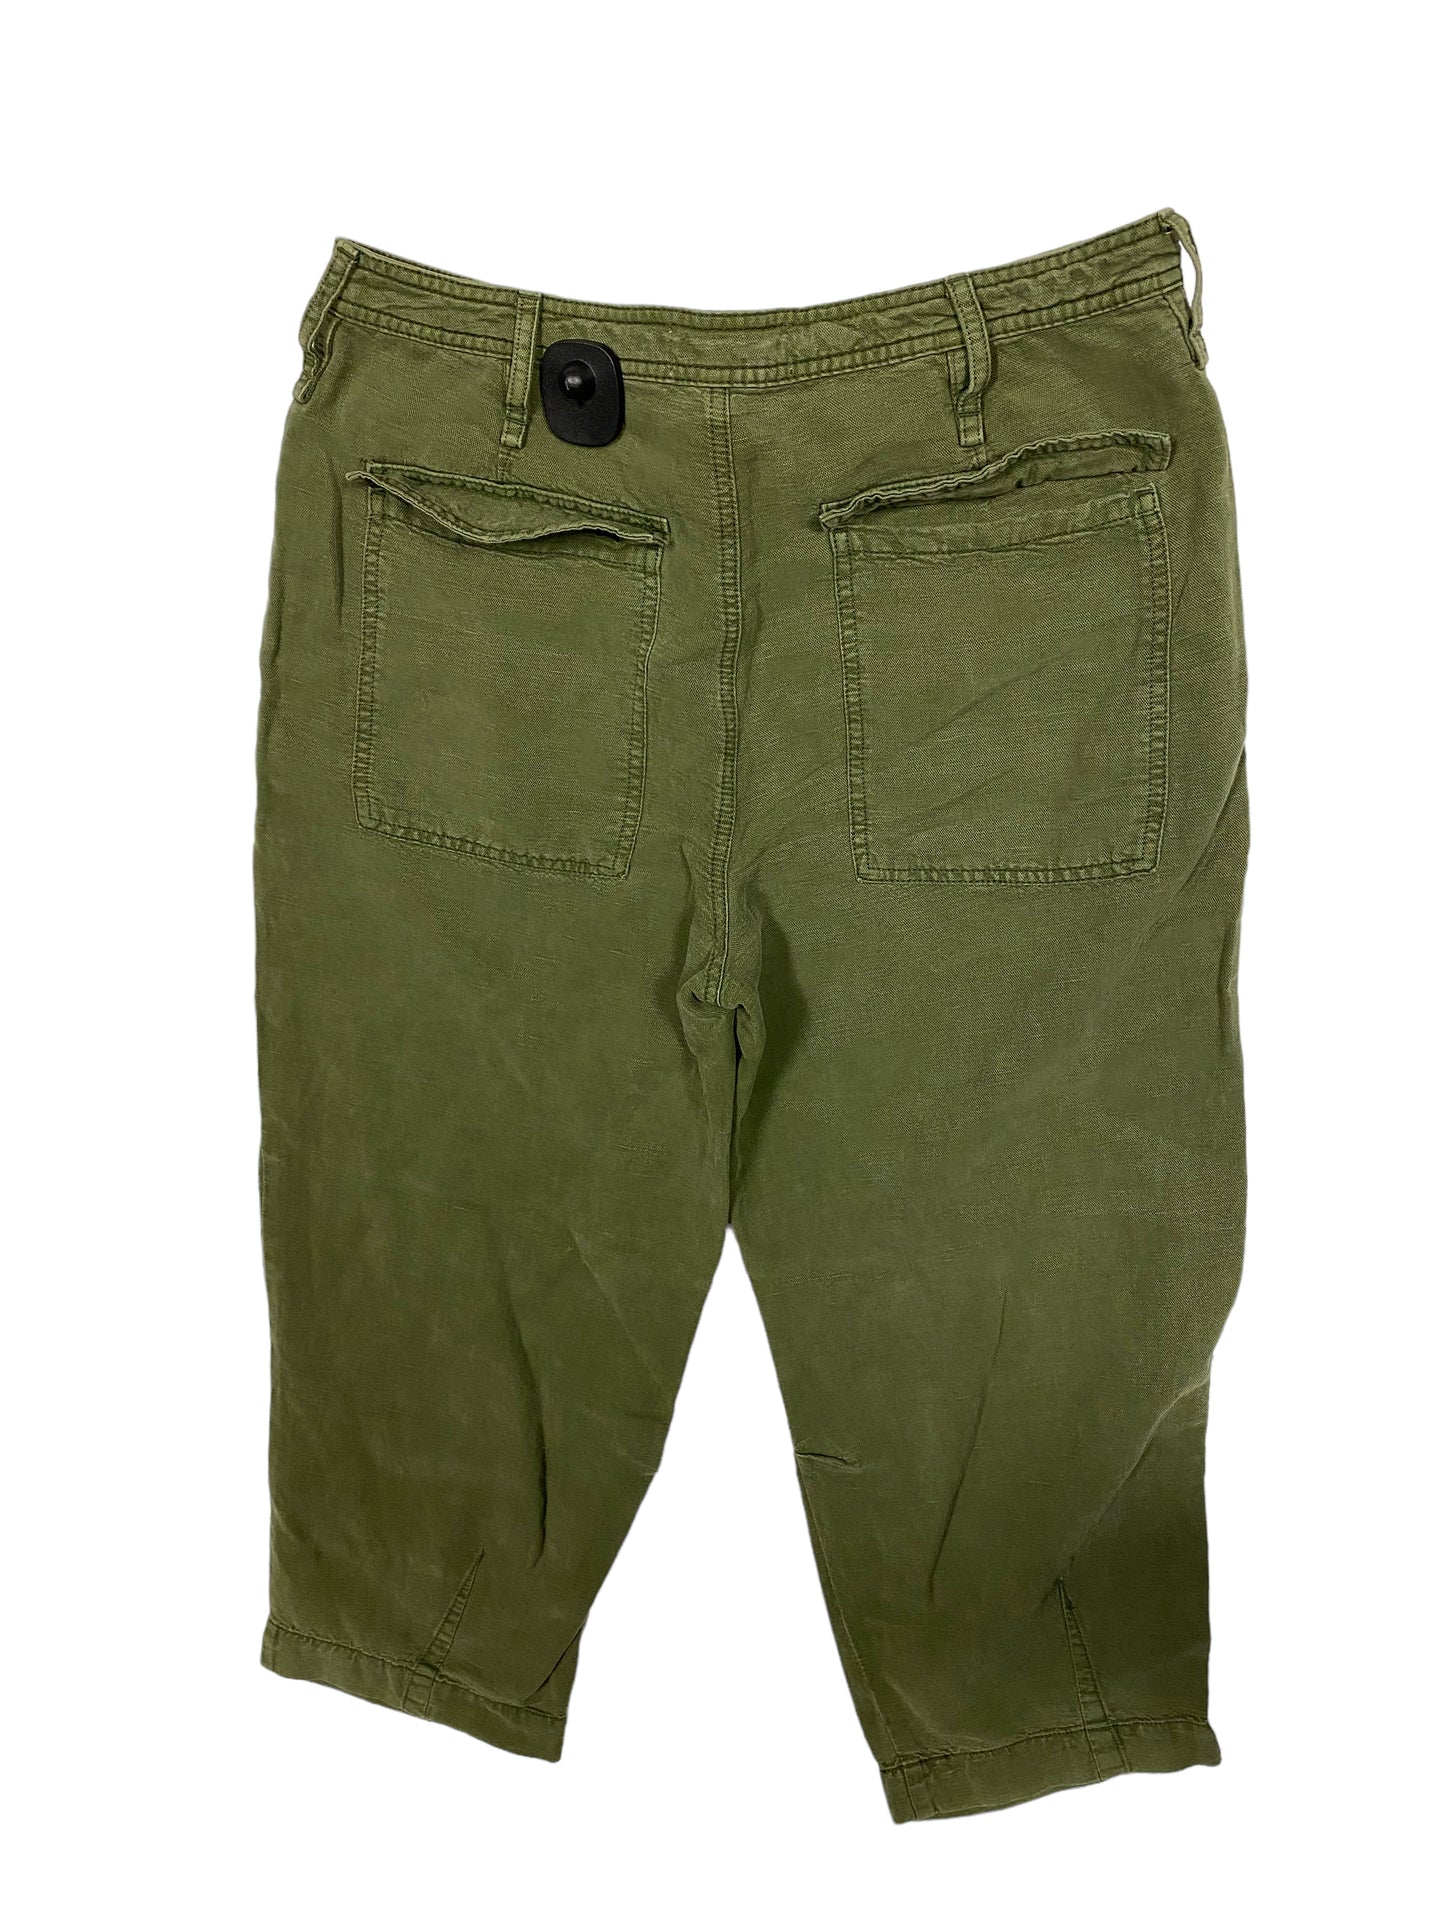 Green Pants Cargo & Utility Anthropologie, Size 12